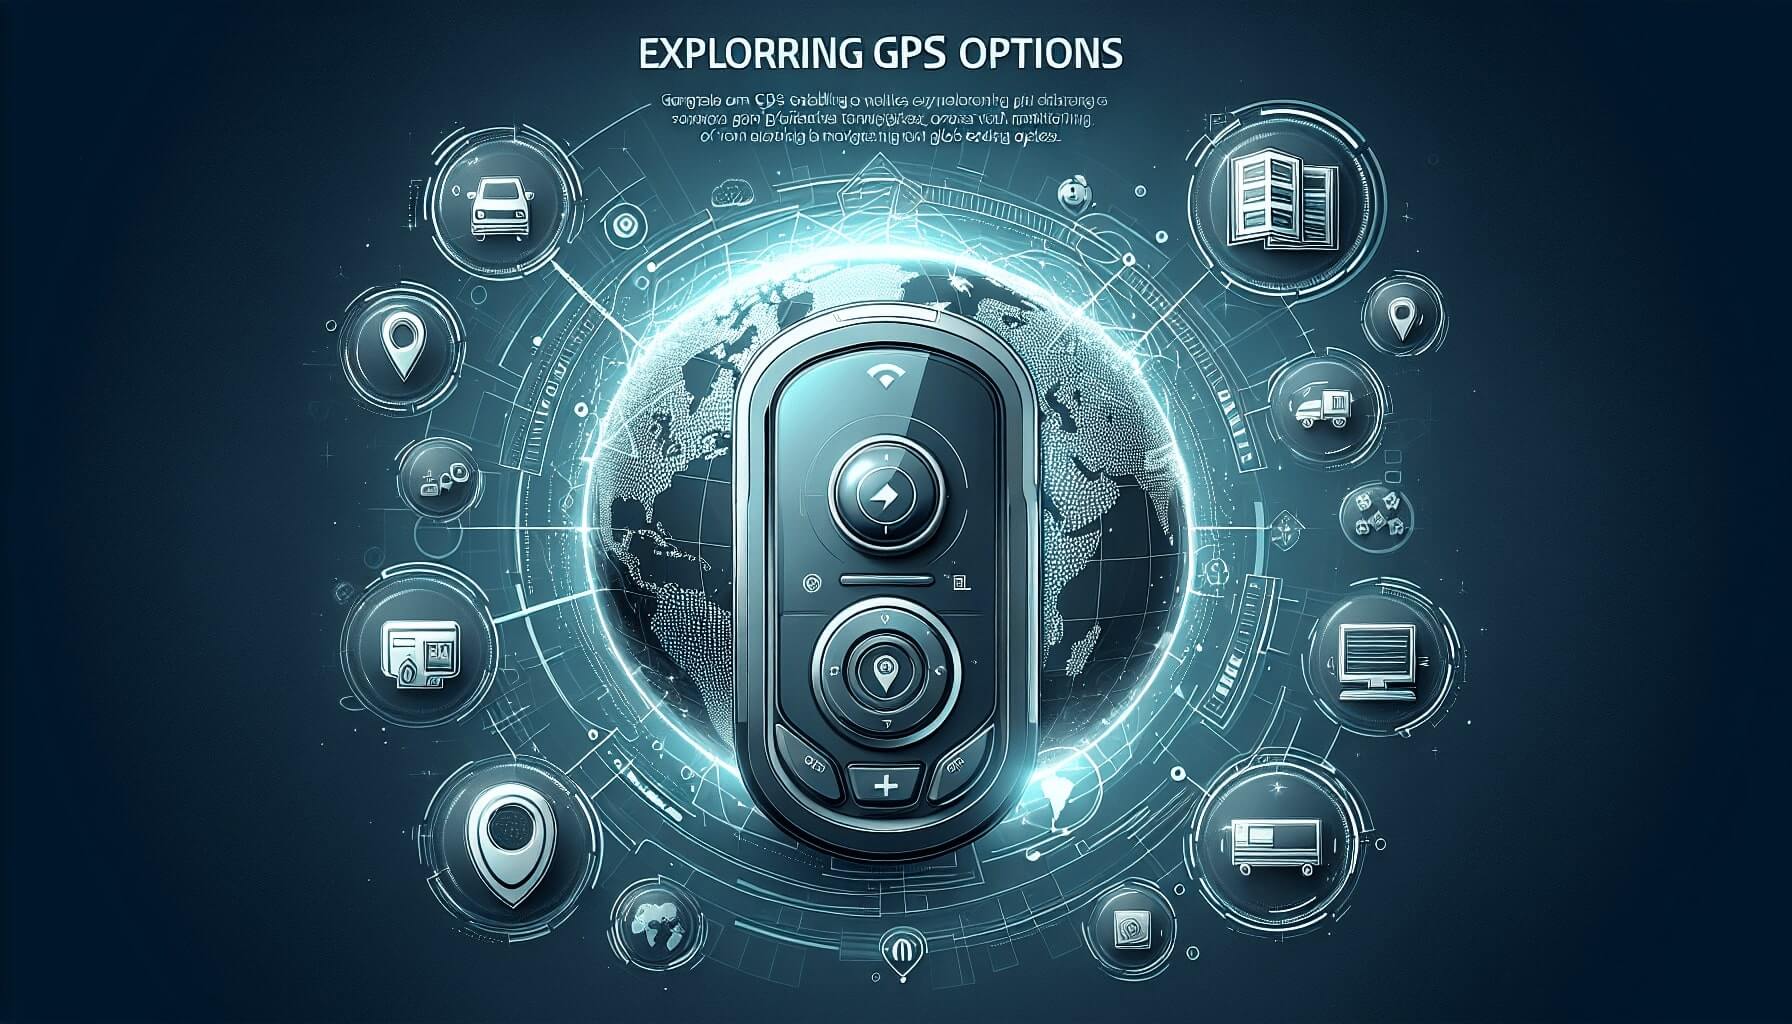 Exploring GPS Options by Samsara